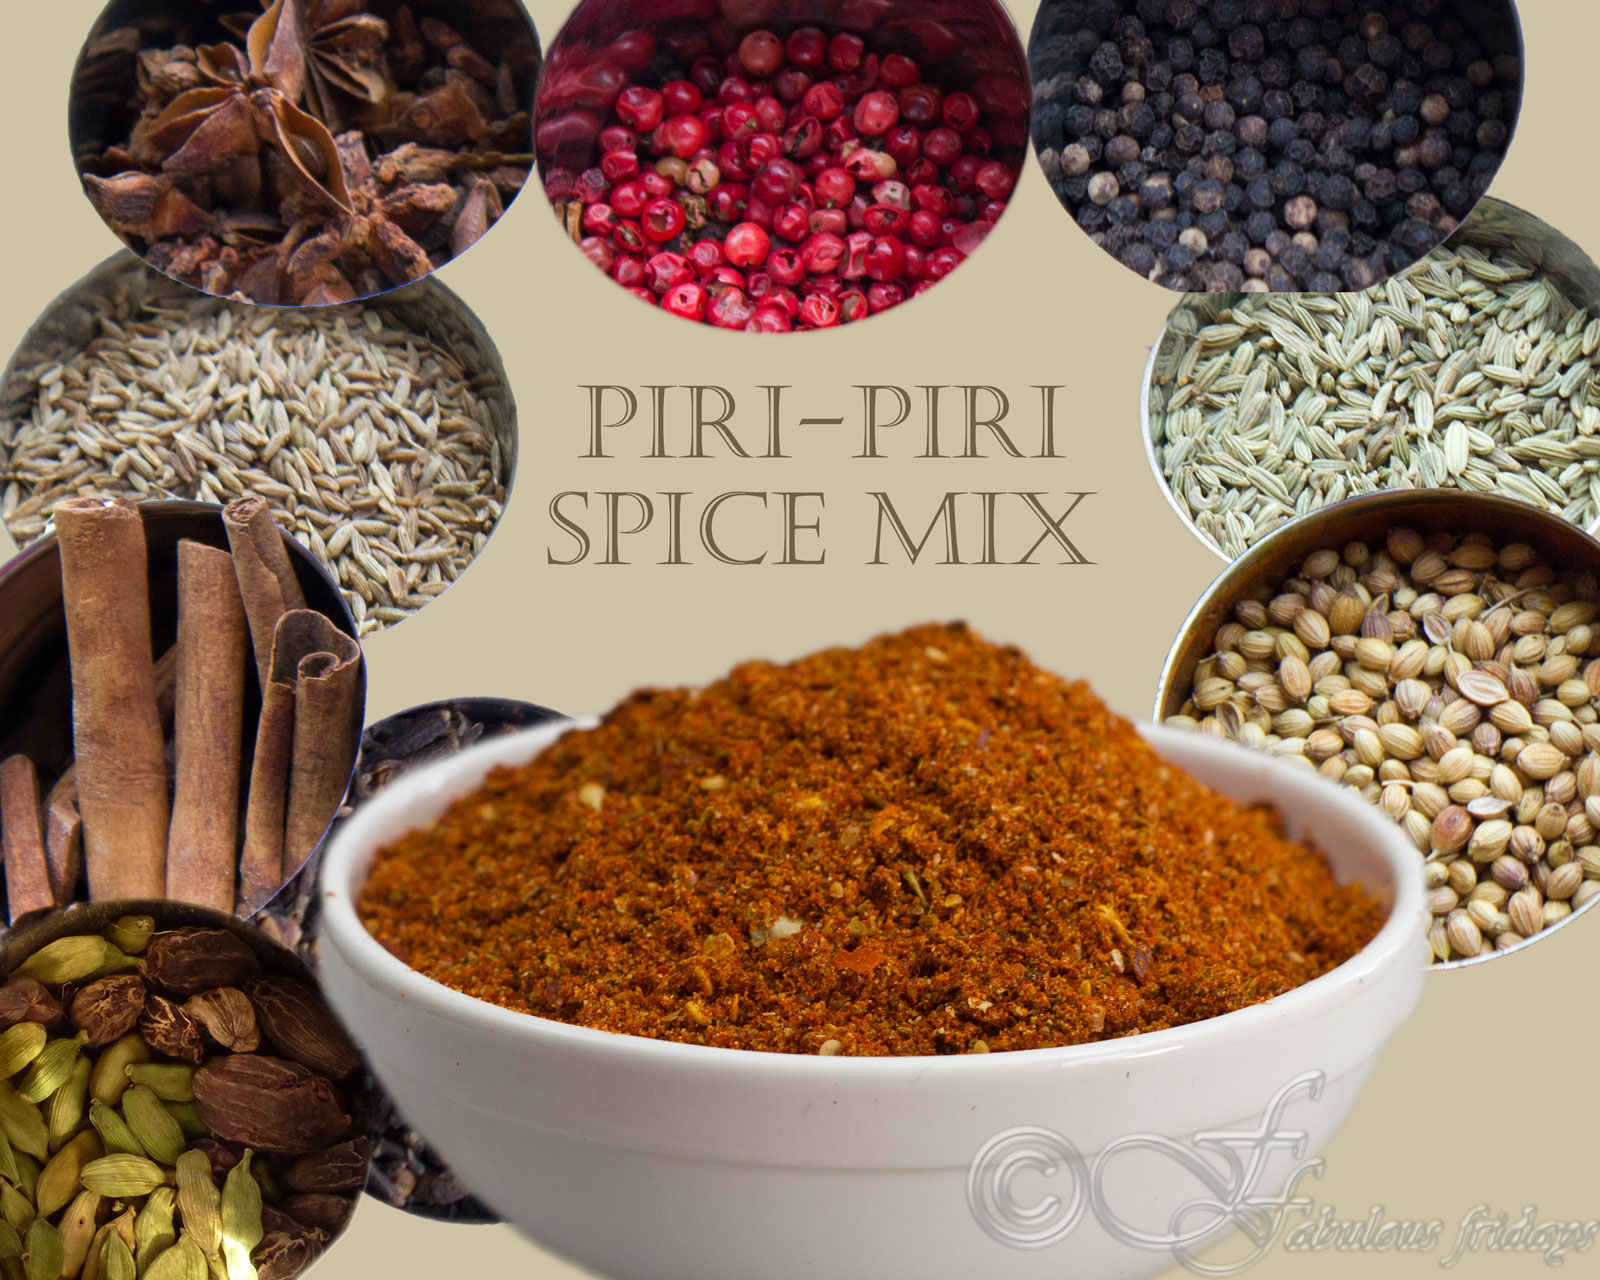 vasketøj Polering Giftig fabulous fridays: Piri-Piri Spice Mix